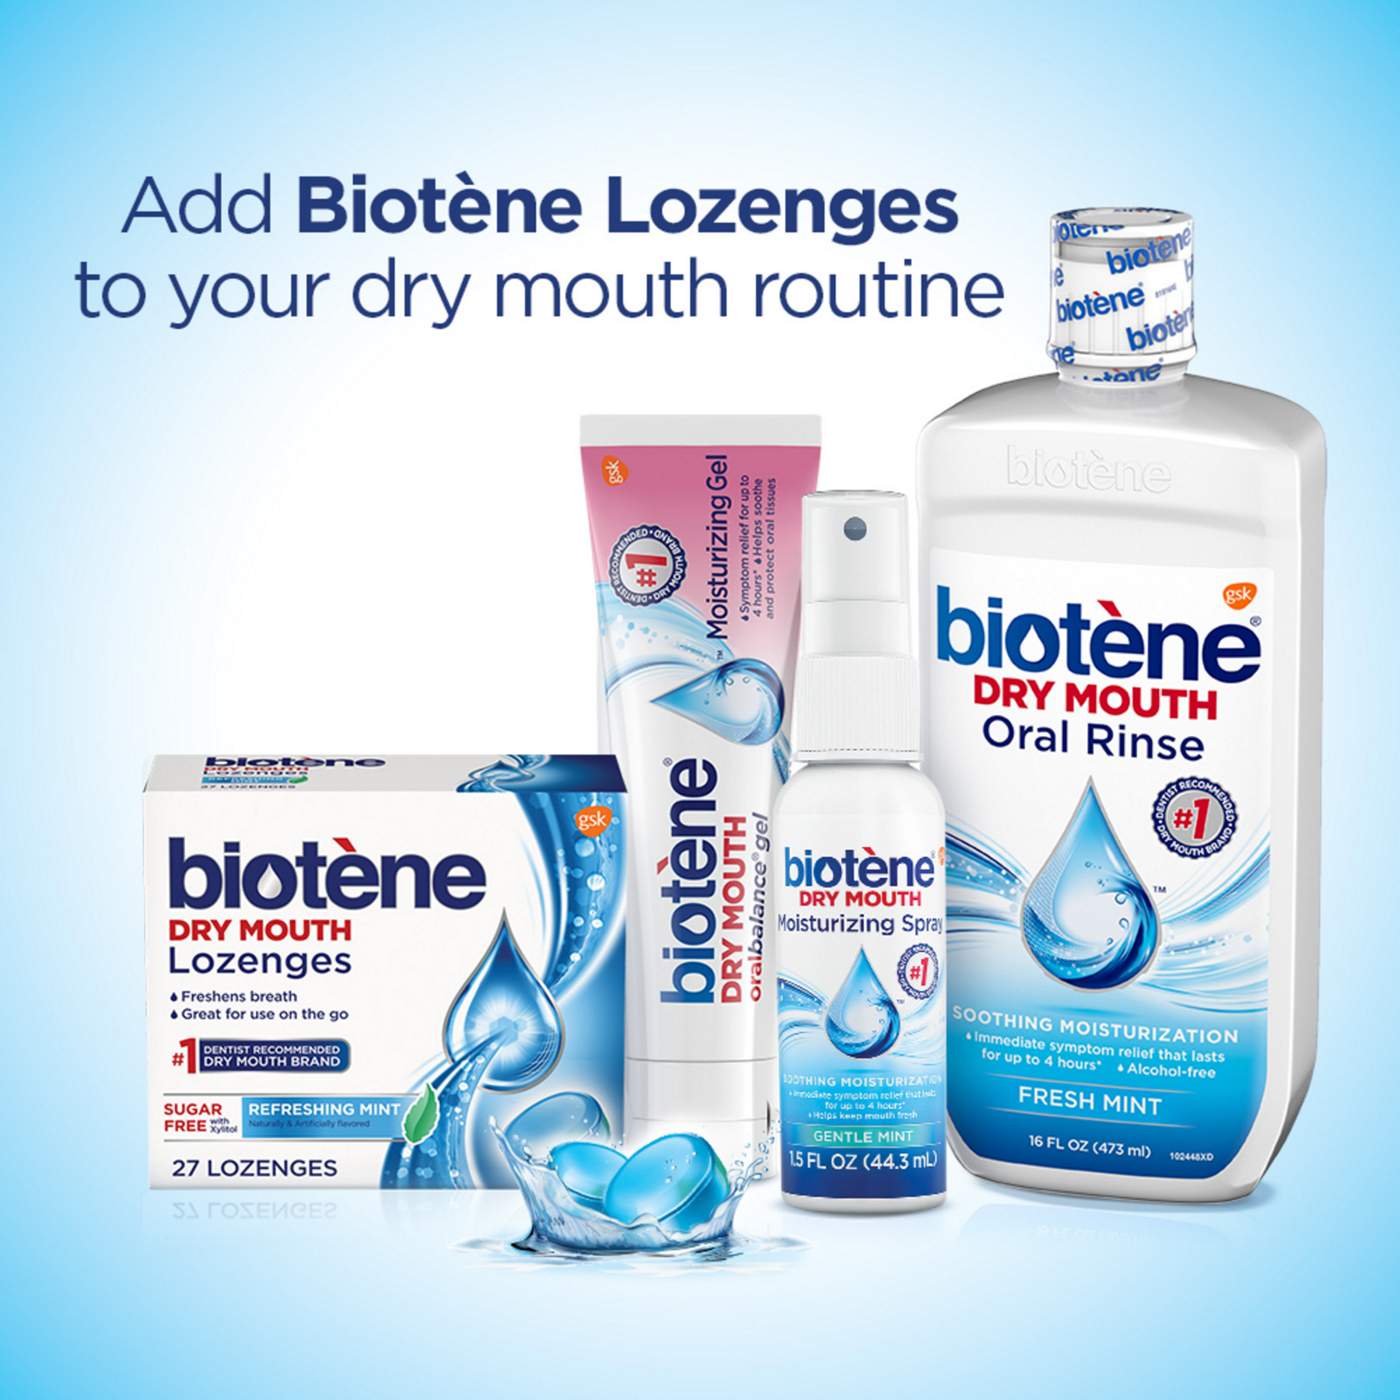 Biotene Dry Mouth Refreshing Mint Lozenges; image 2 of 2